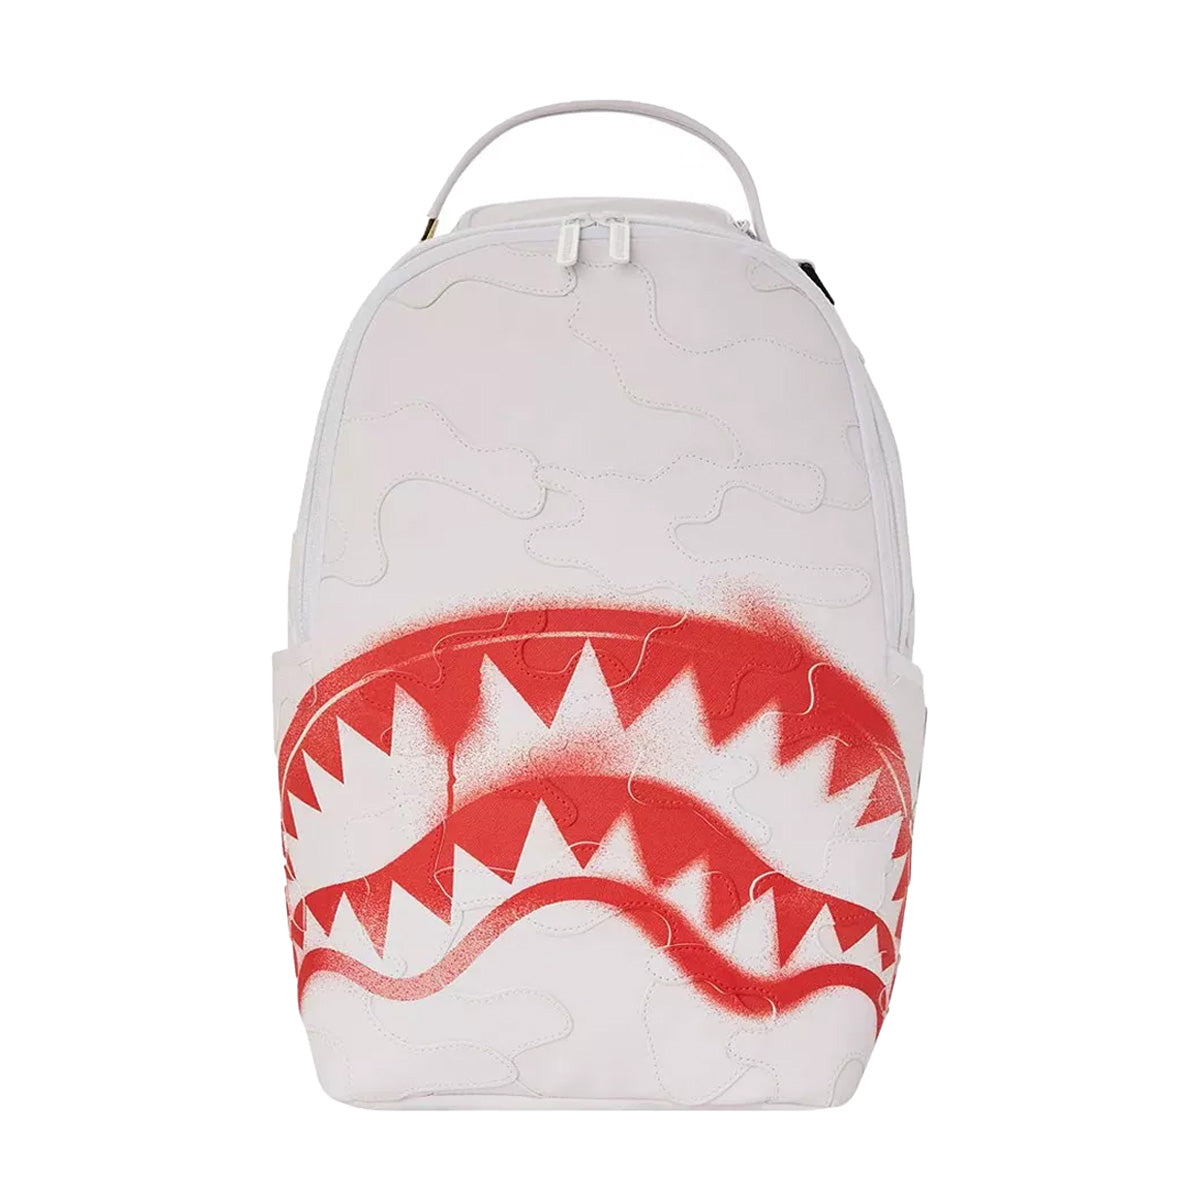 Sprayground Camo Branded Backpack